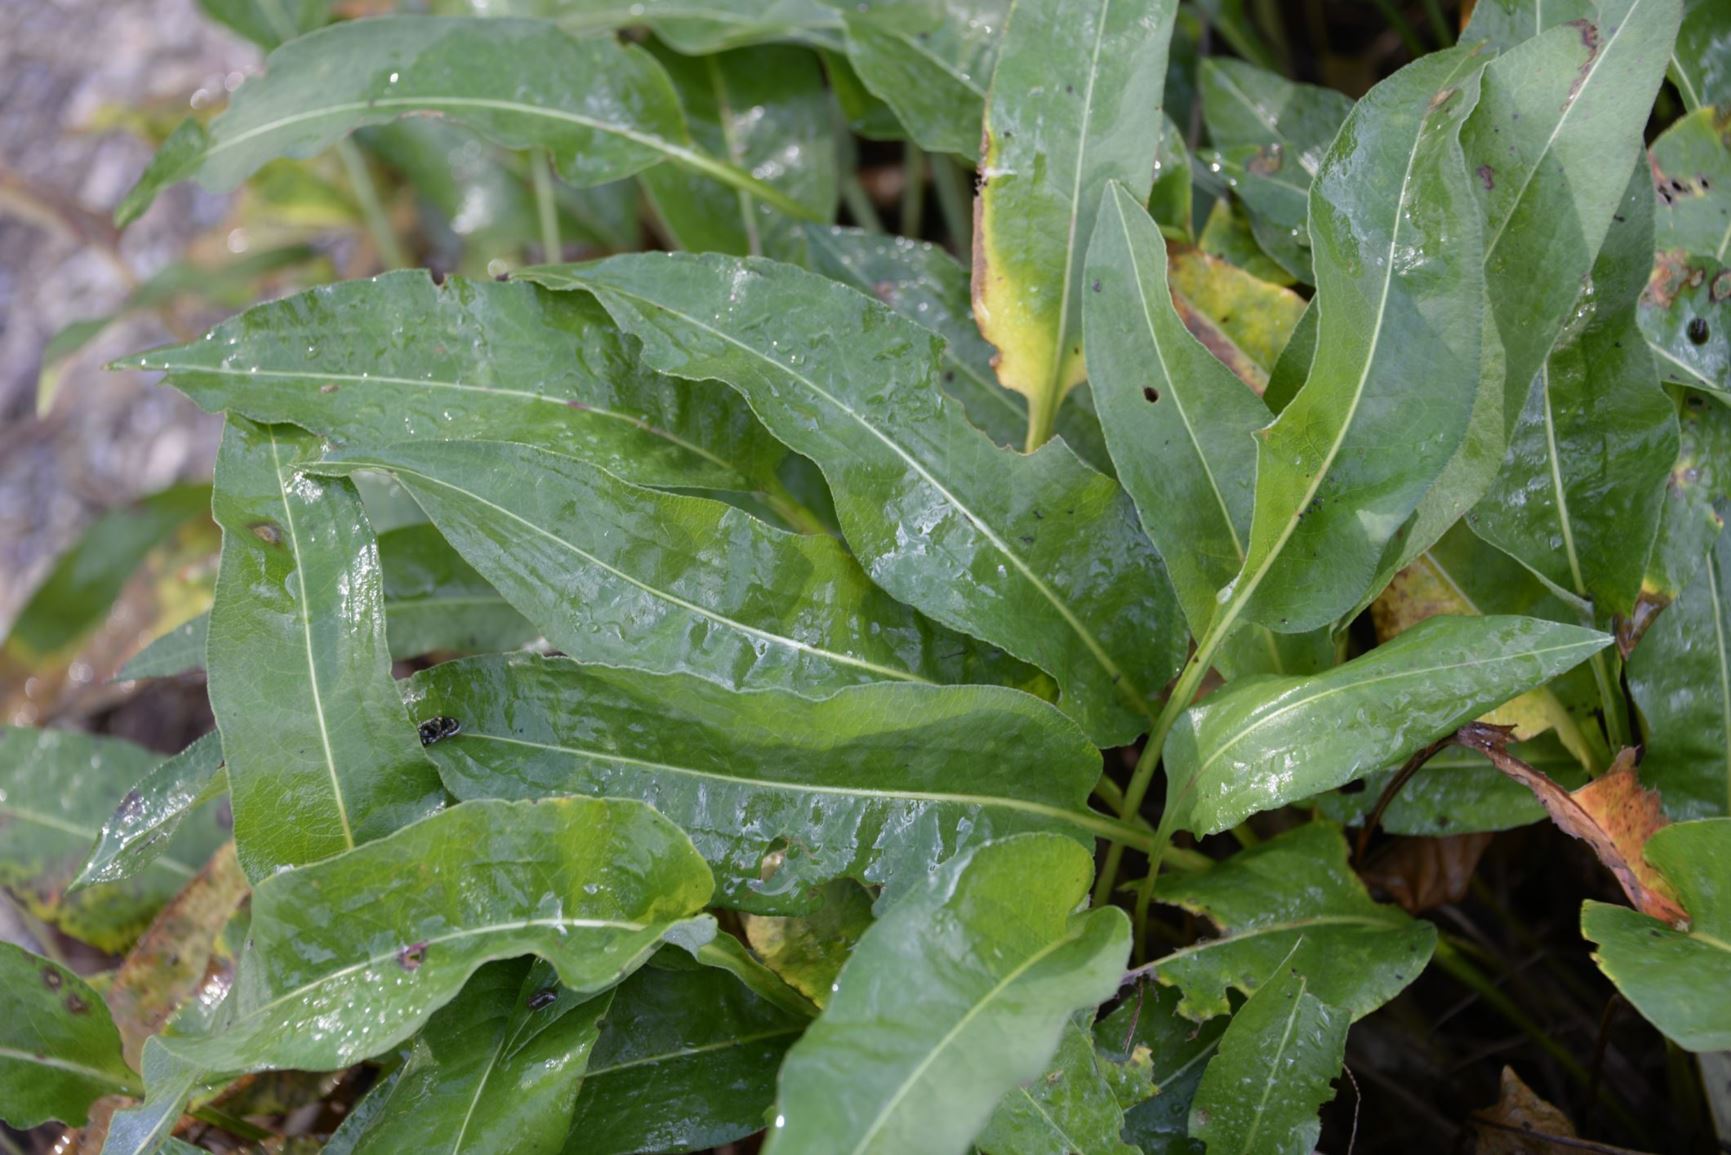 Persicaria bistorta - Adderwortel, Bistort, Snakeweed, Easter ledges, Quanshen (拳参)